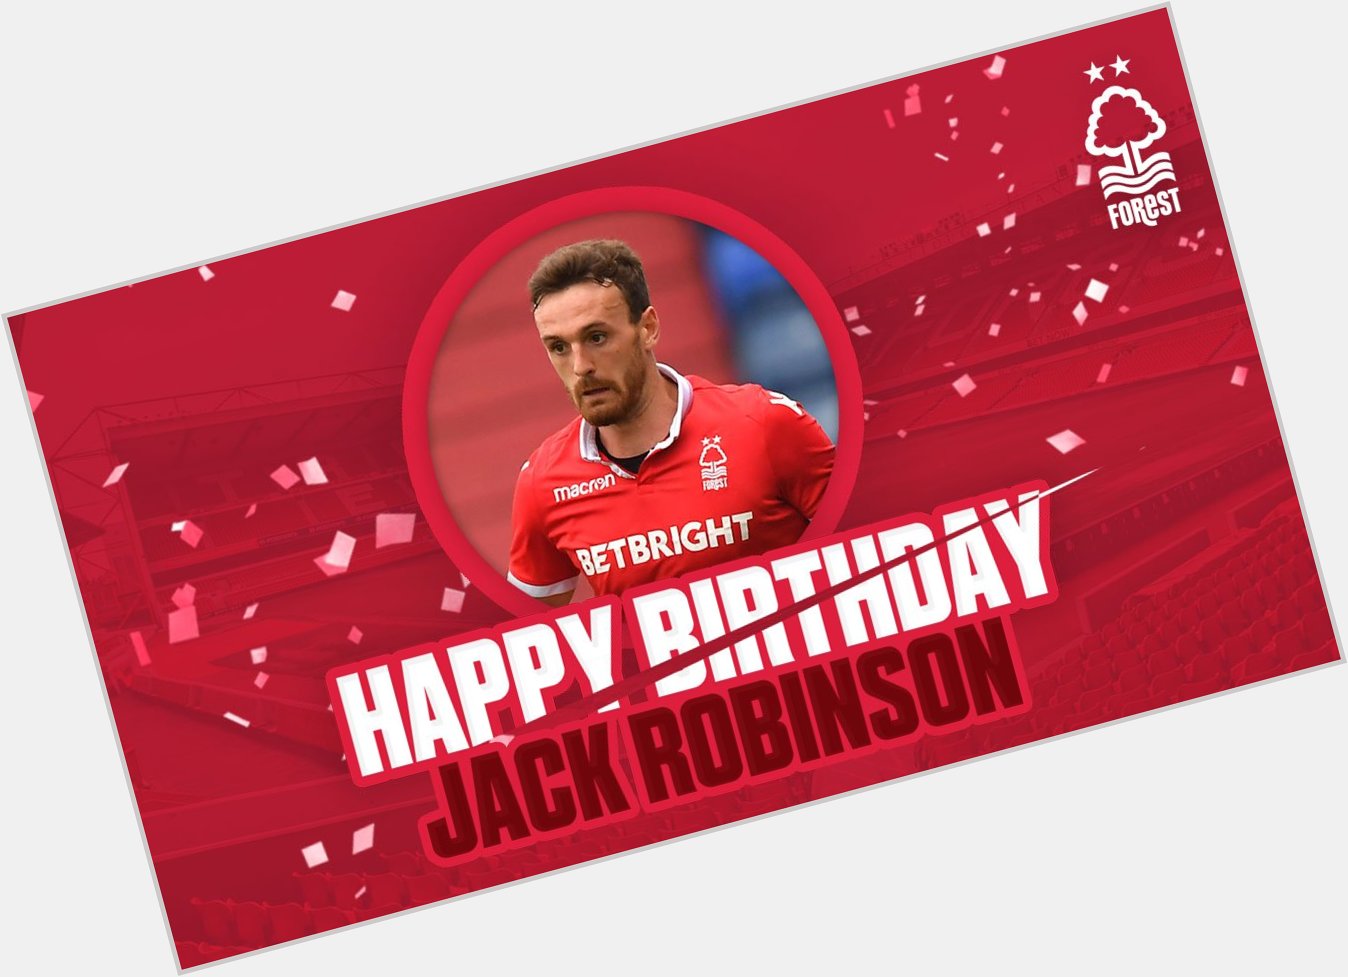  Happy birthday Jack Robinson!  